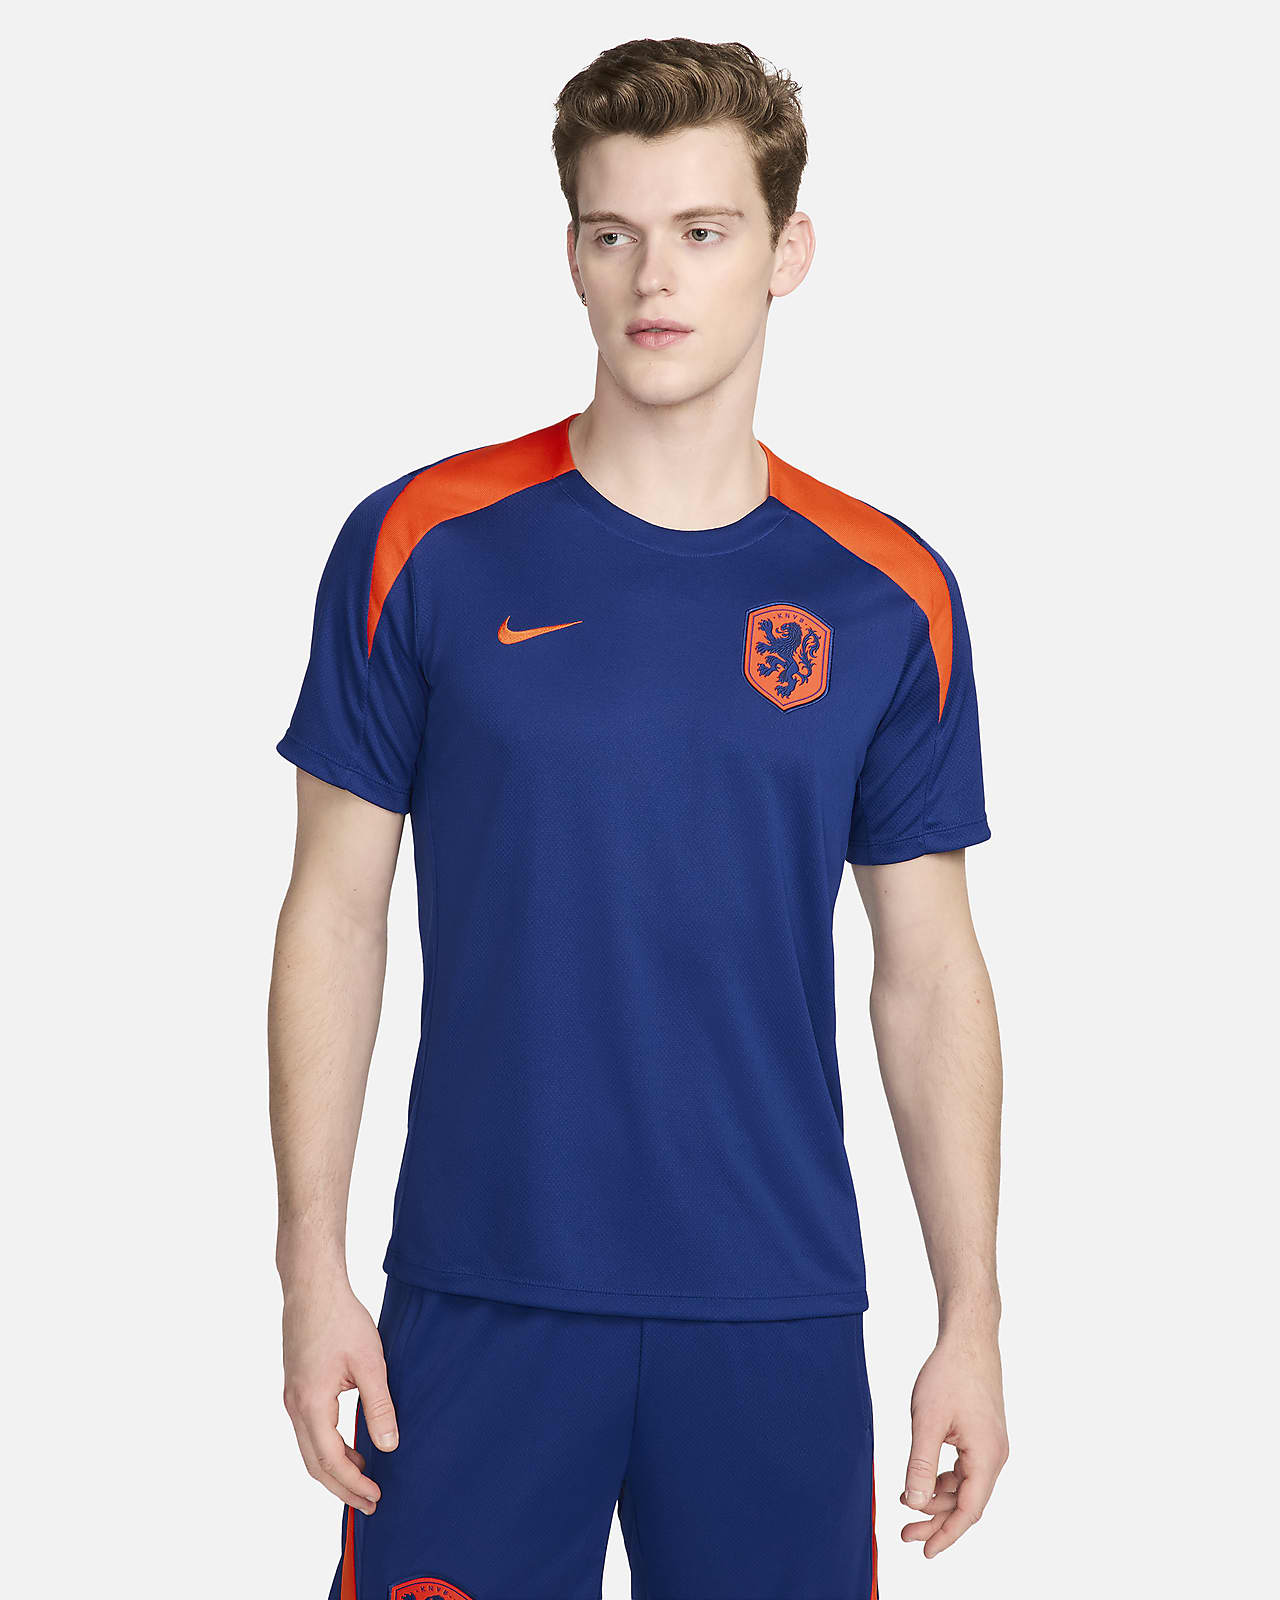 Netherlands Strike Men's Nike Dri-FIT Football Short-Sleeve Knit Top